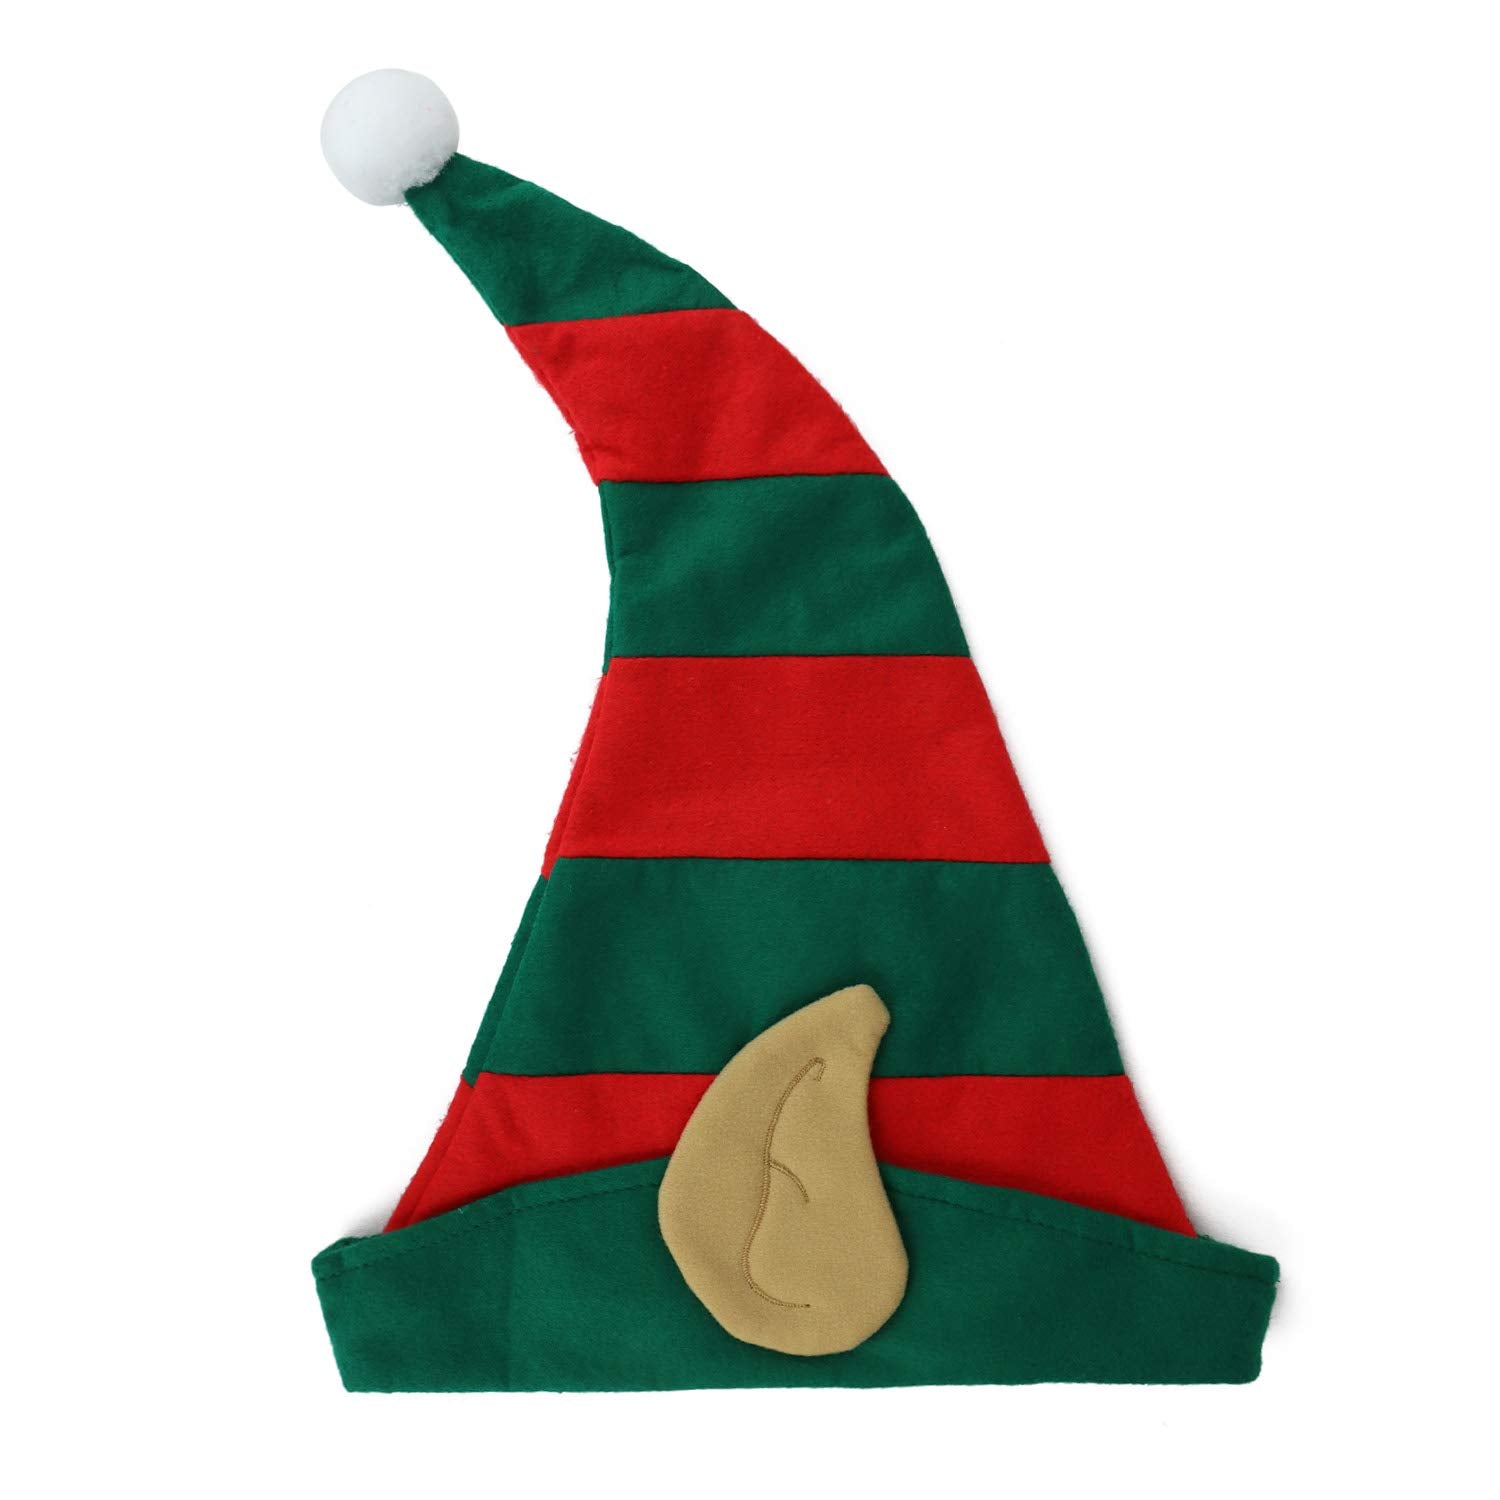 Armycrew Santa's Helper Striped Felt Elf Hat Ears pom